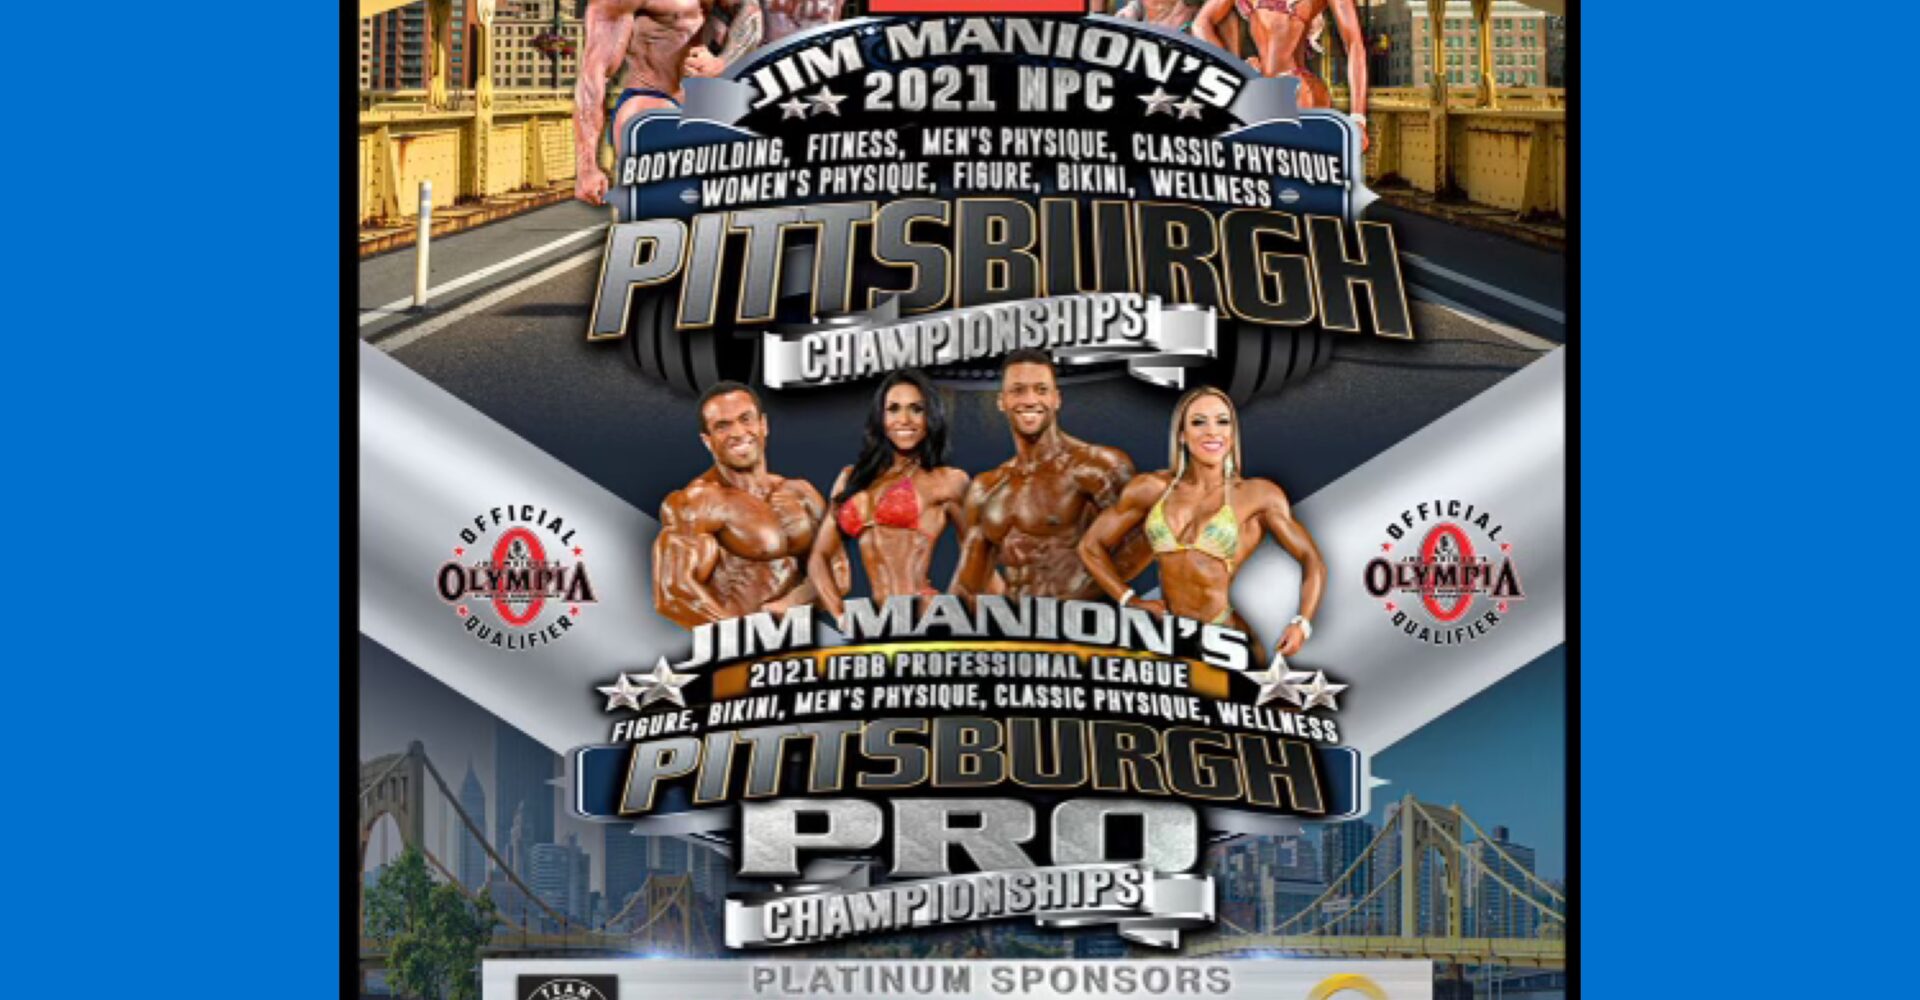 2021 NPC/IFBB Pittsburgh Championships NPC NEWS TV